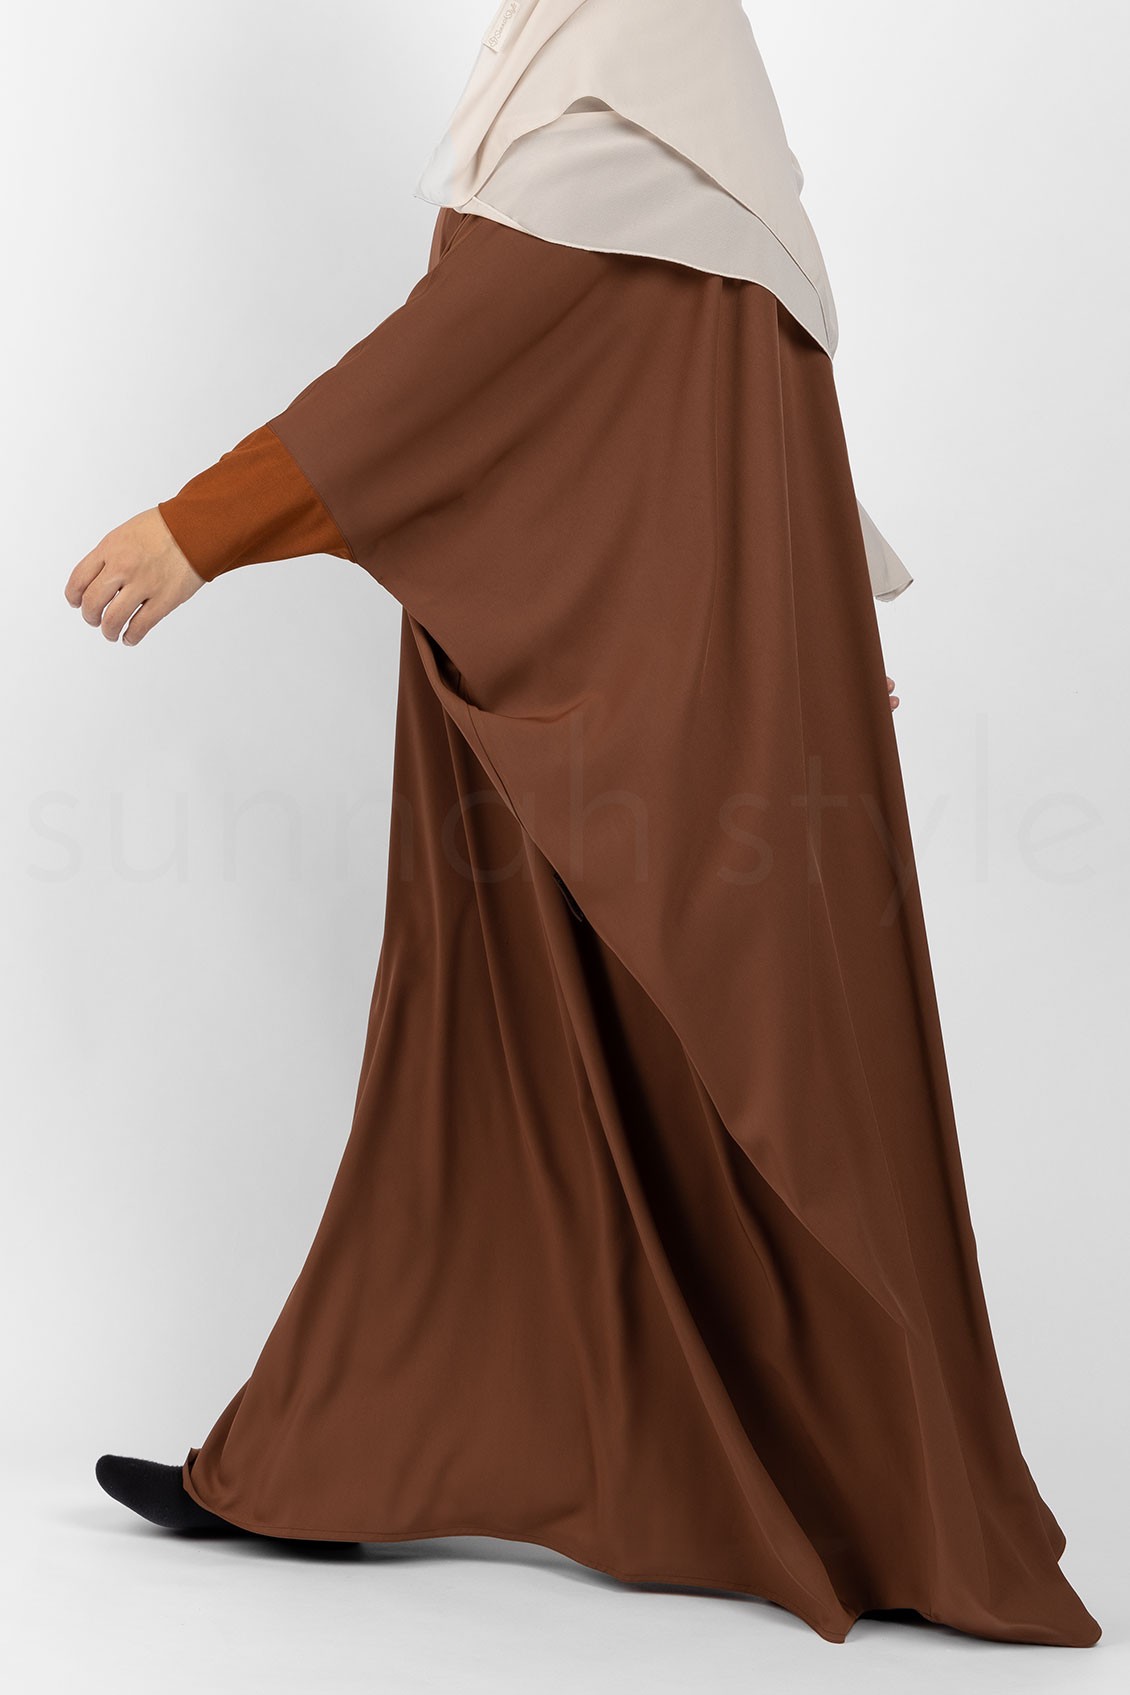 Sunnah Style Classic Bisht Abaya Russet Brown